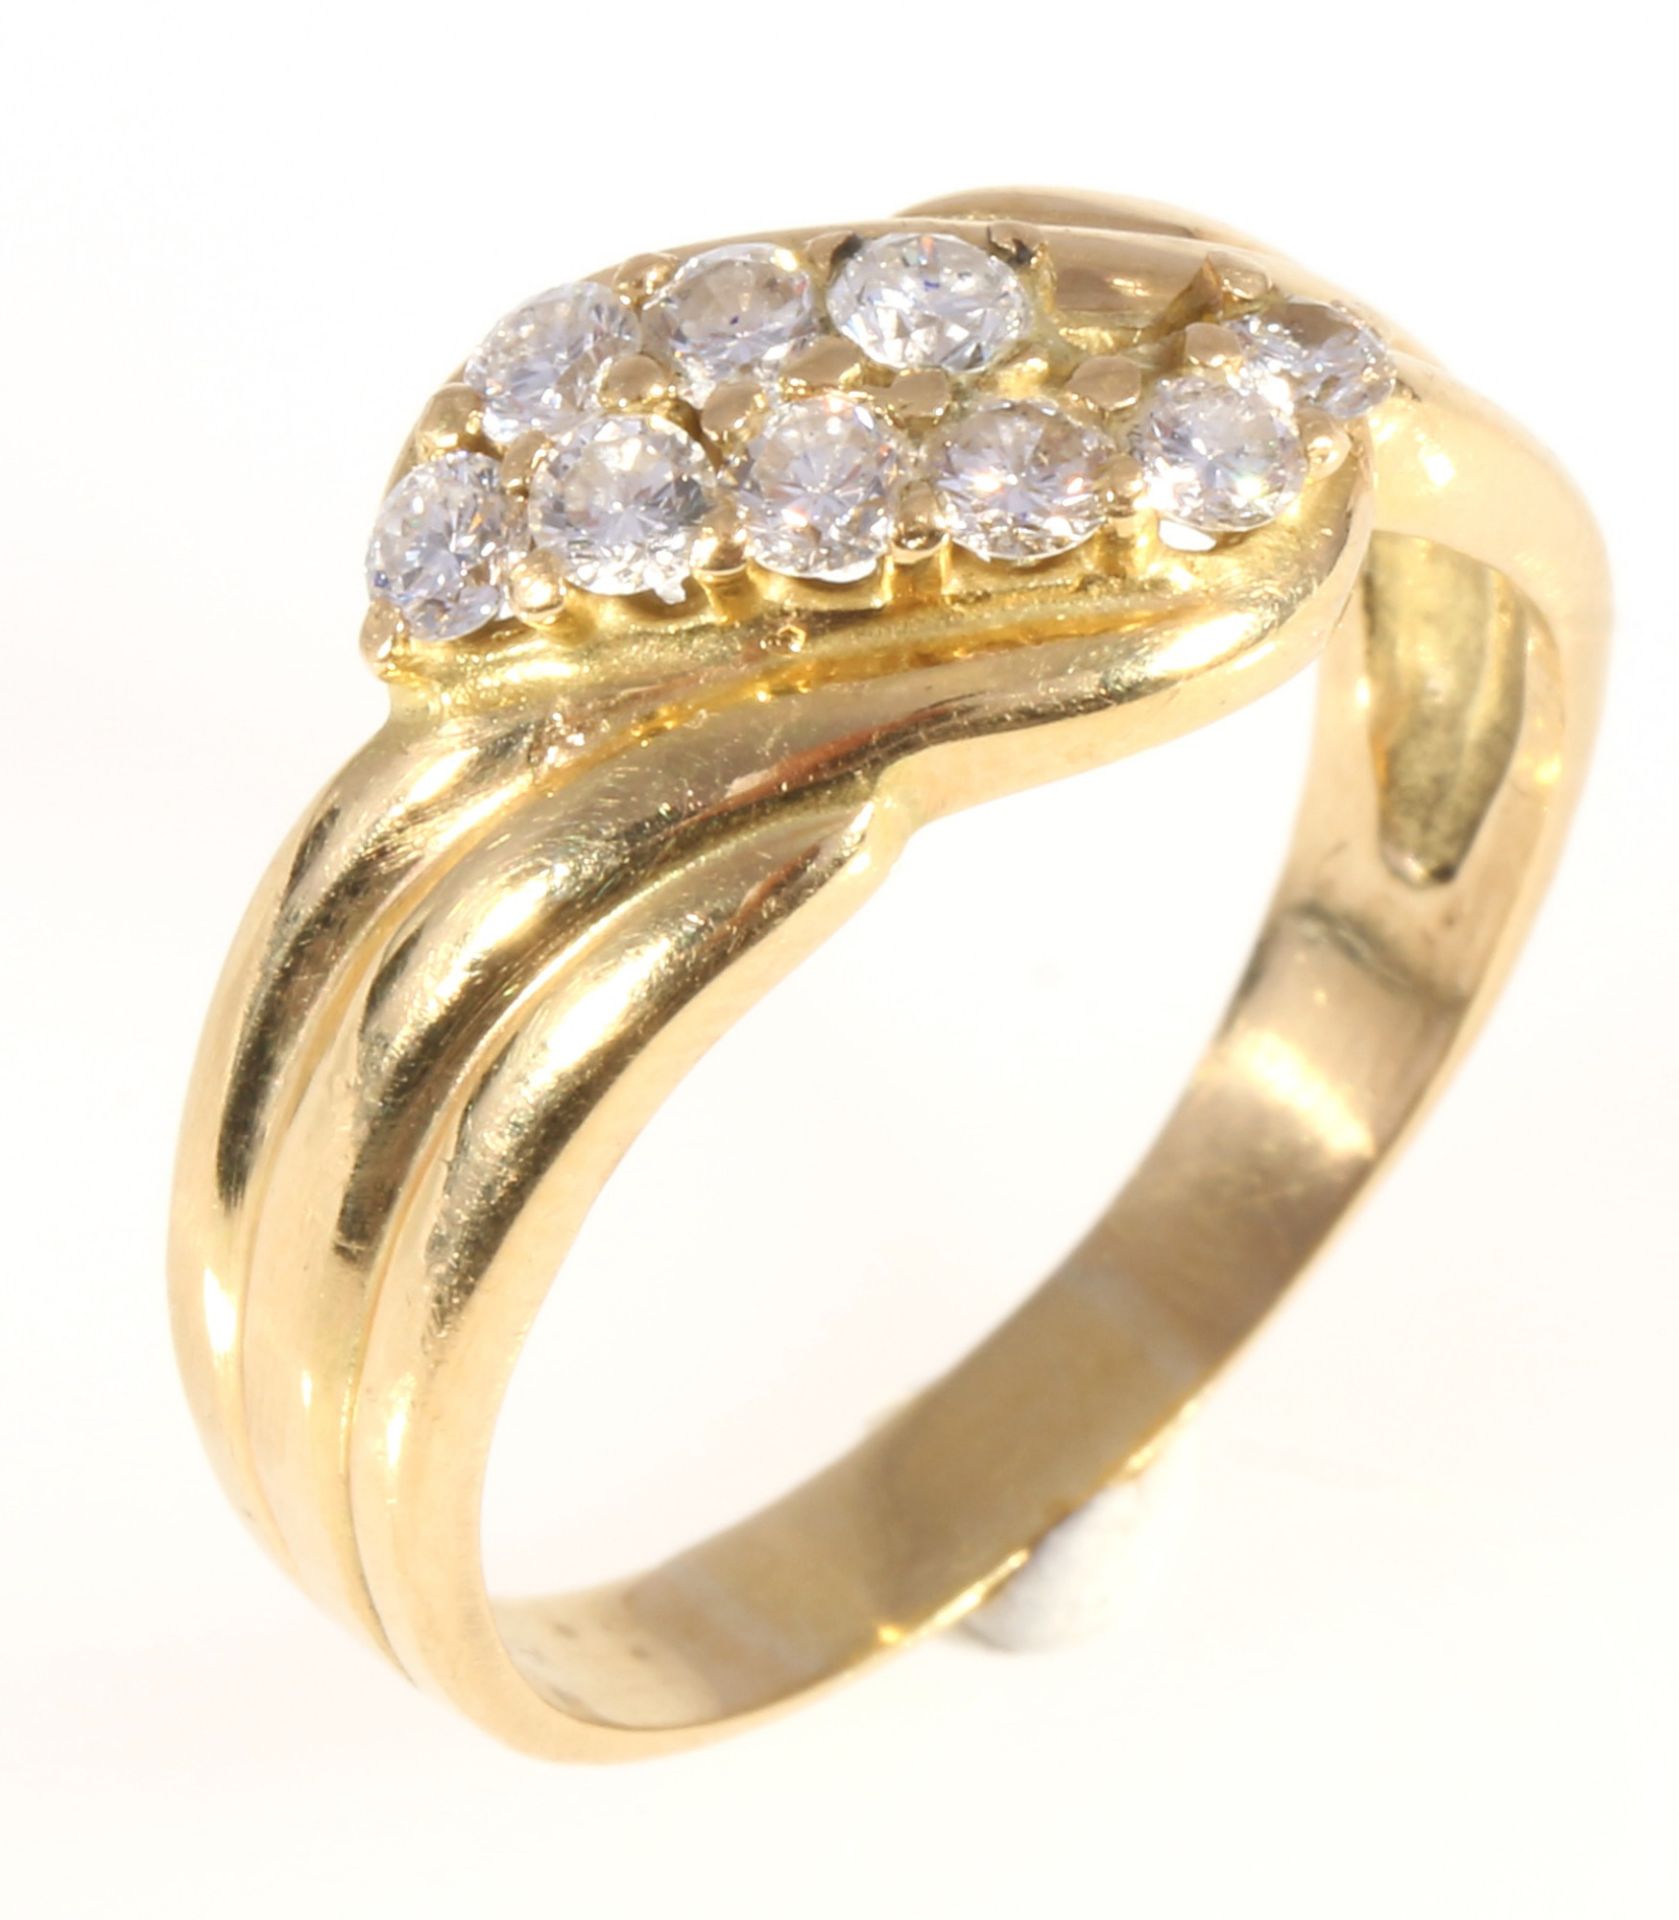 750 Gold Ring mit Brillanten 0,72ct, 18K gold ring with 9 diamonds,